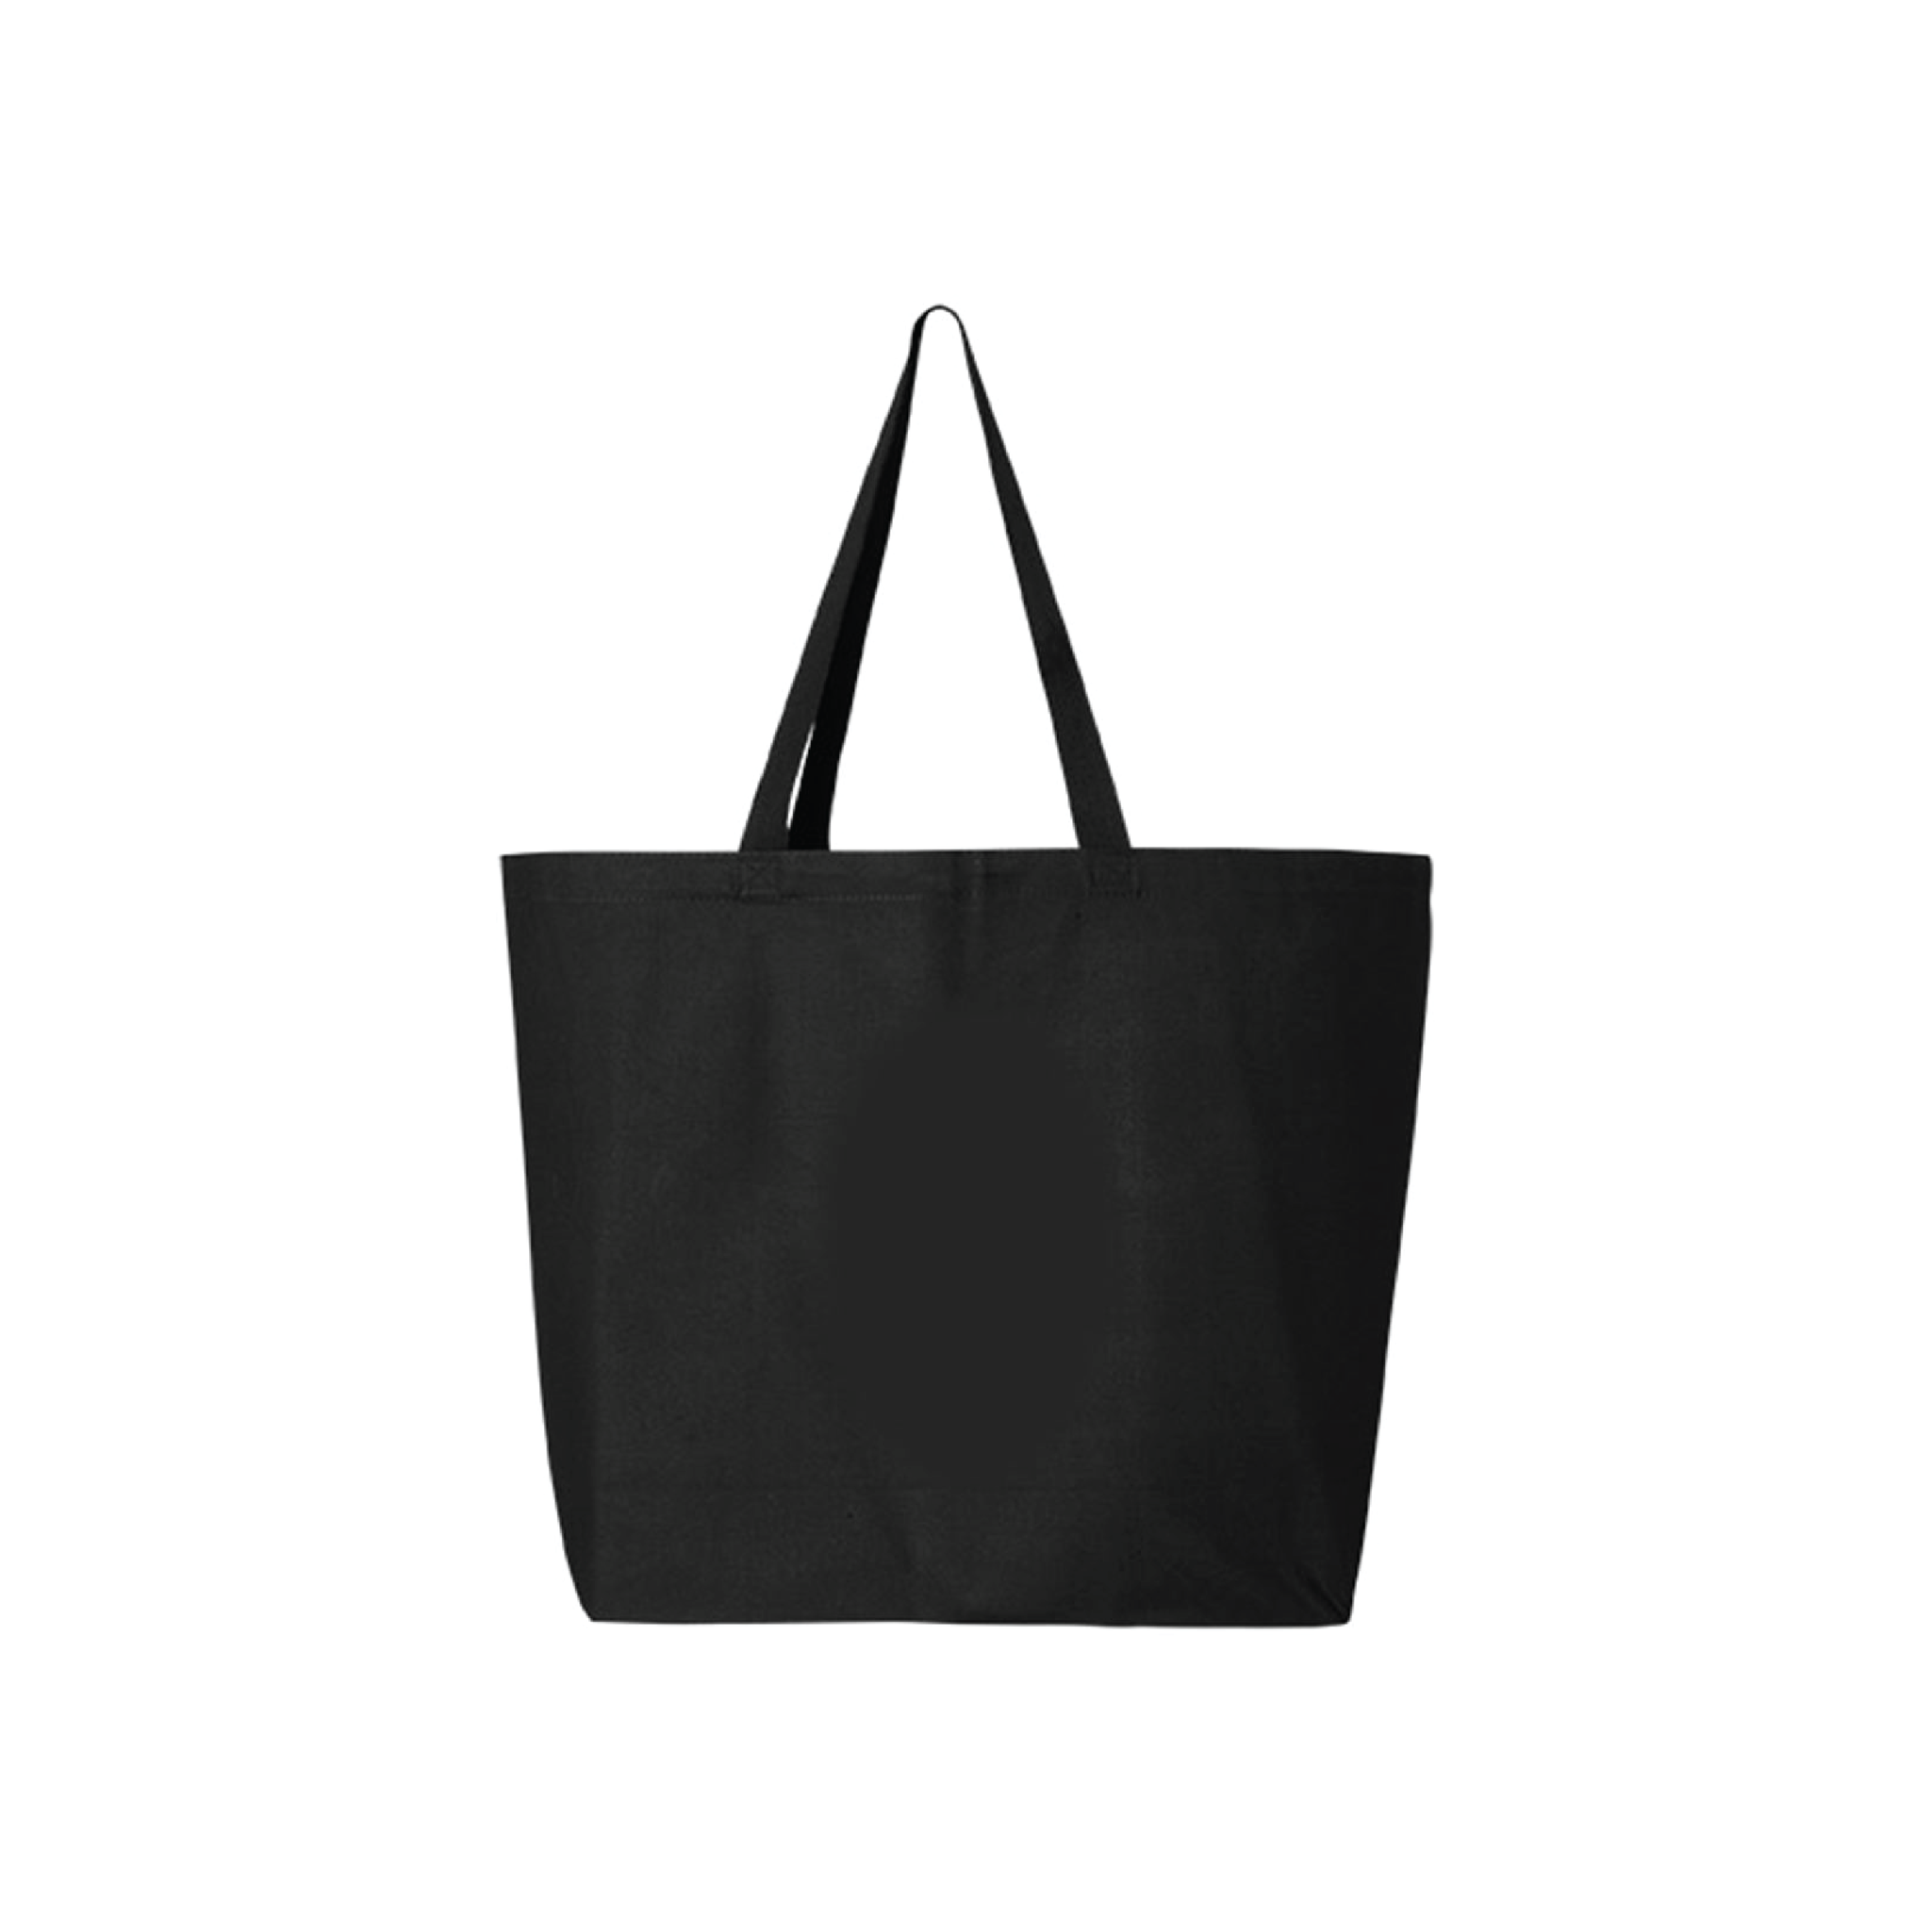 Black Large Tote Bag, Natural 100% Cotton Black Canvas Zipper Tote